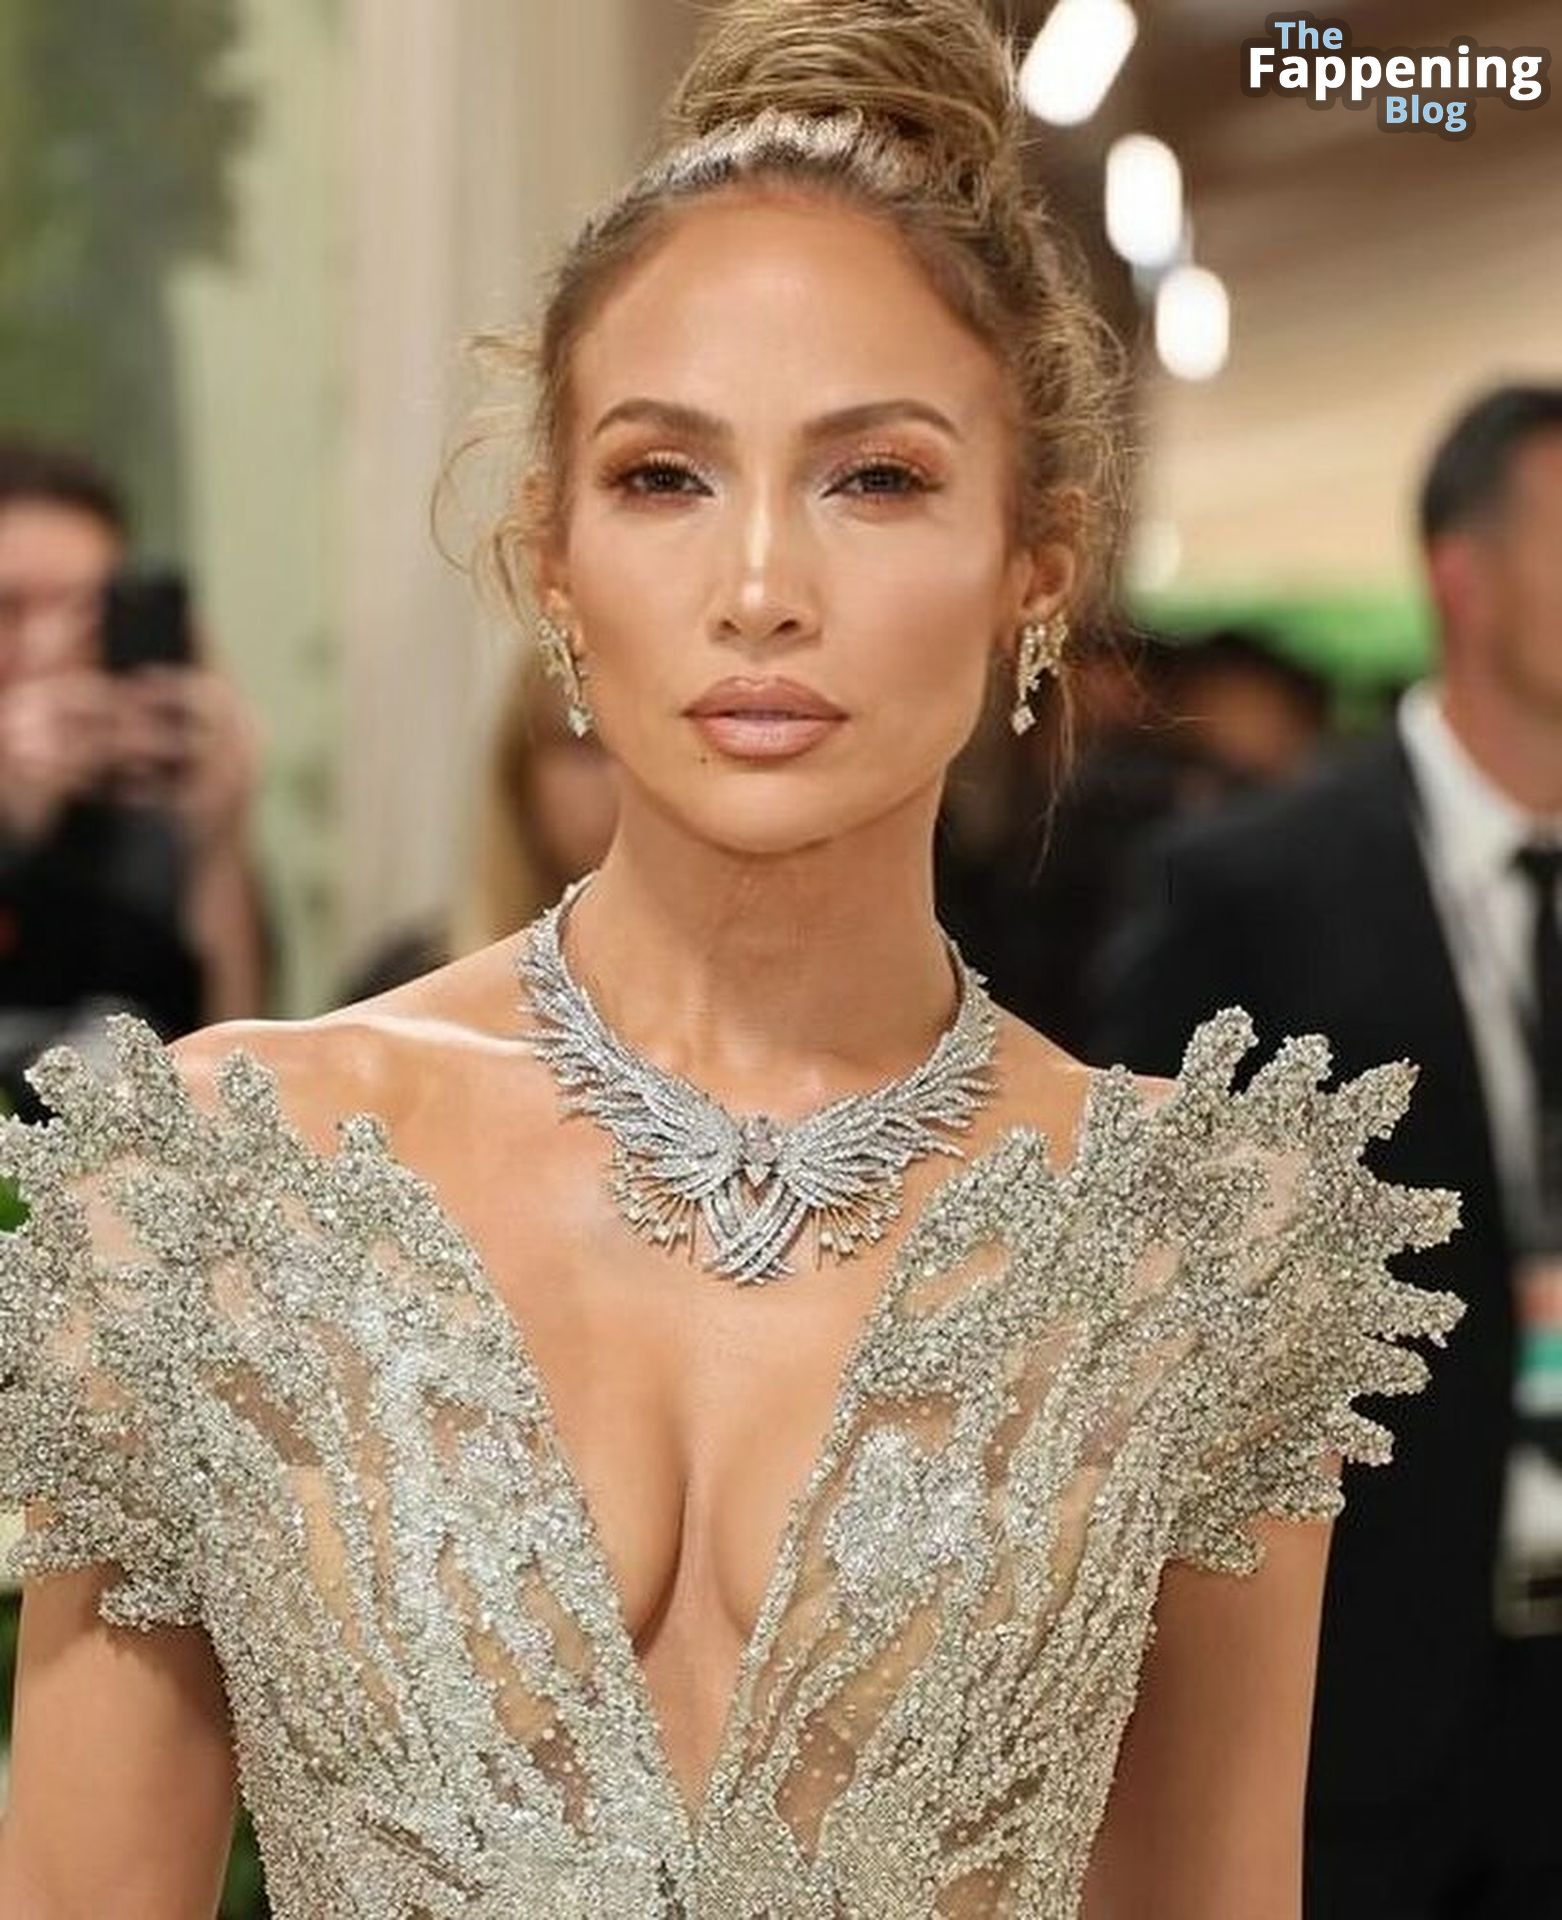 Jennifer-Lopez-Hot-12-The-Fappening-Blog.jpg